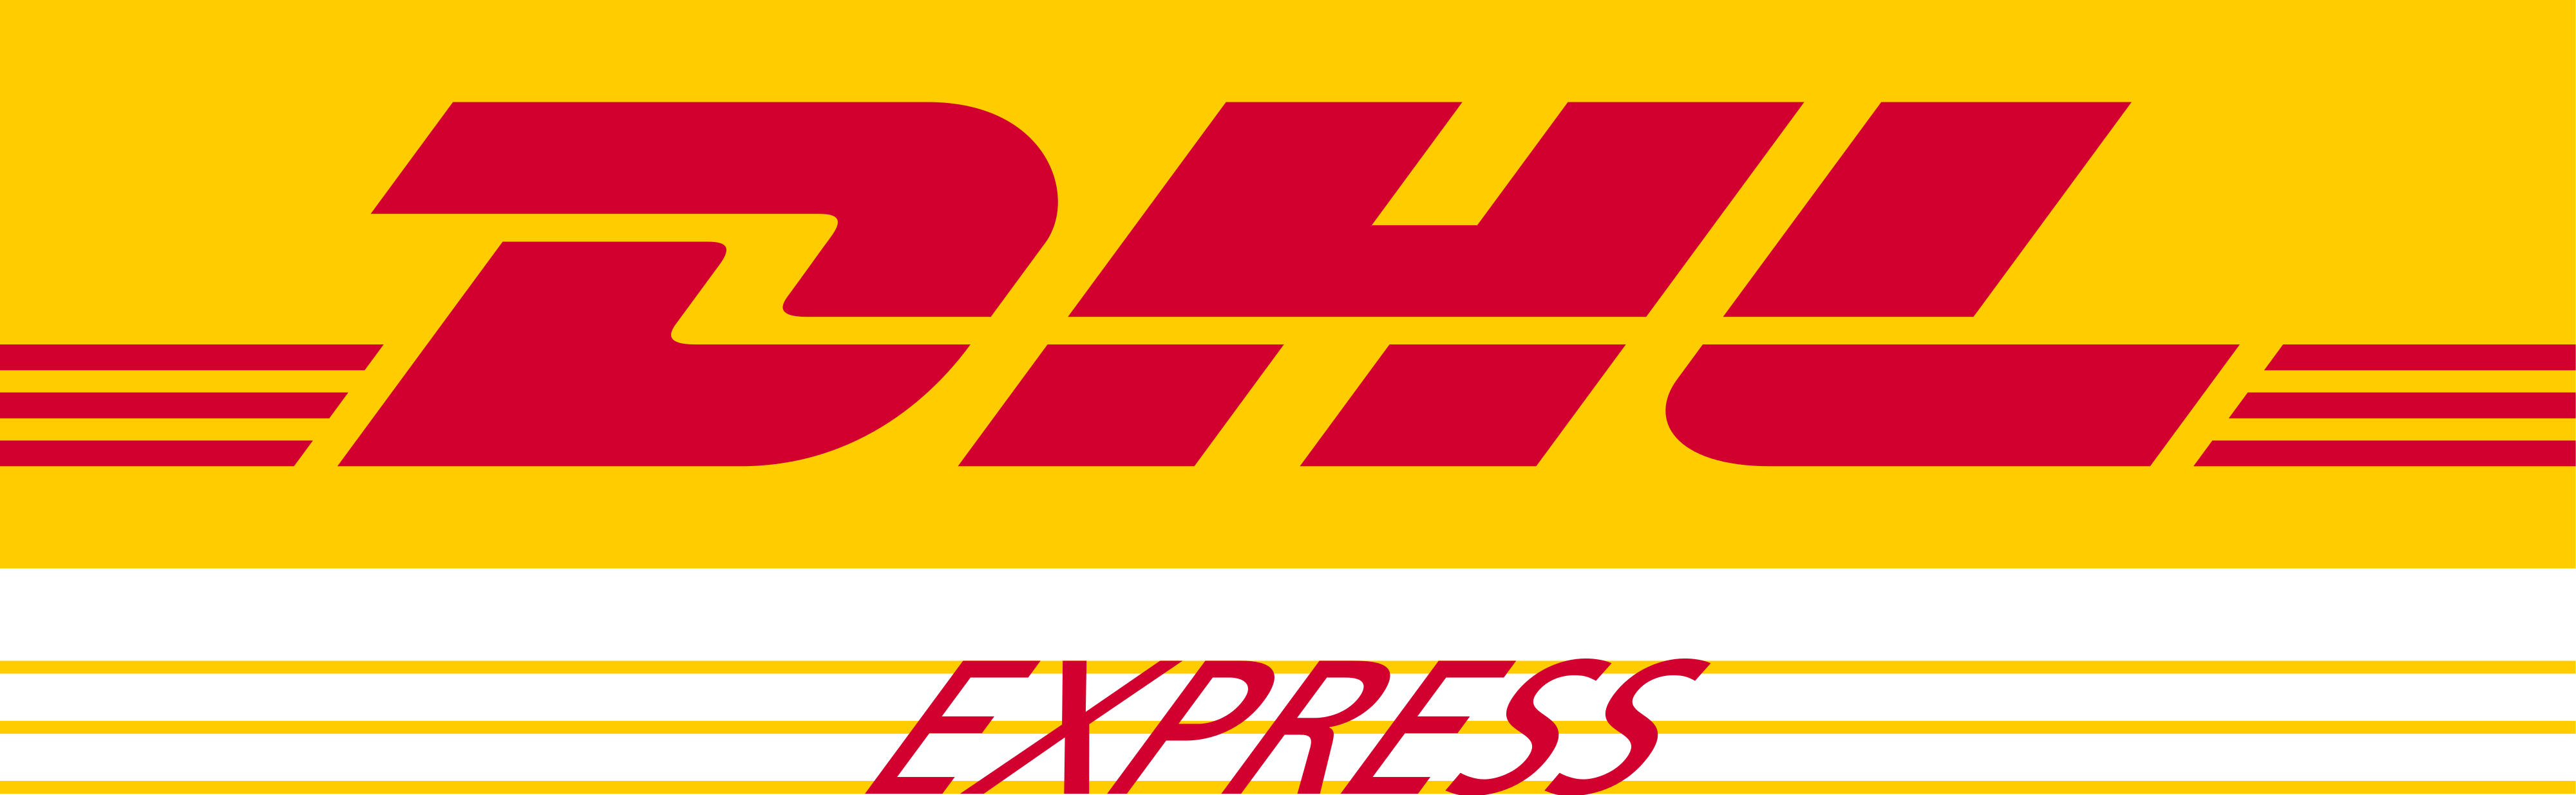 dhl express logo 1 - DHL Logo